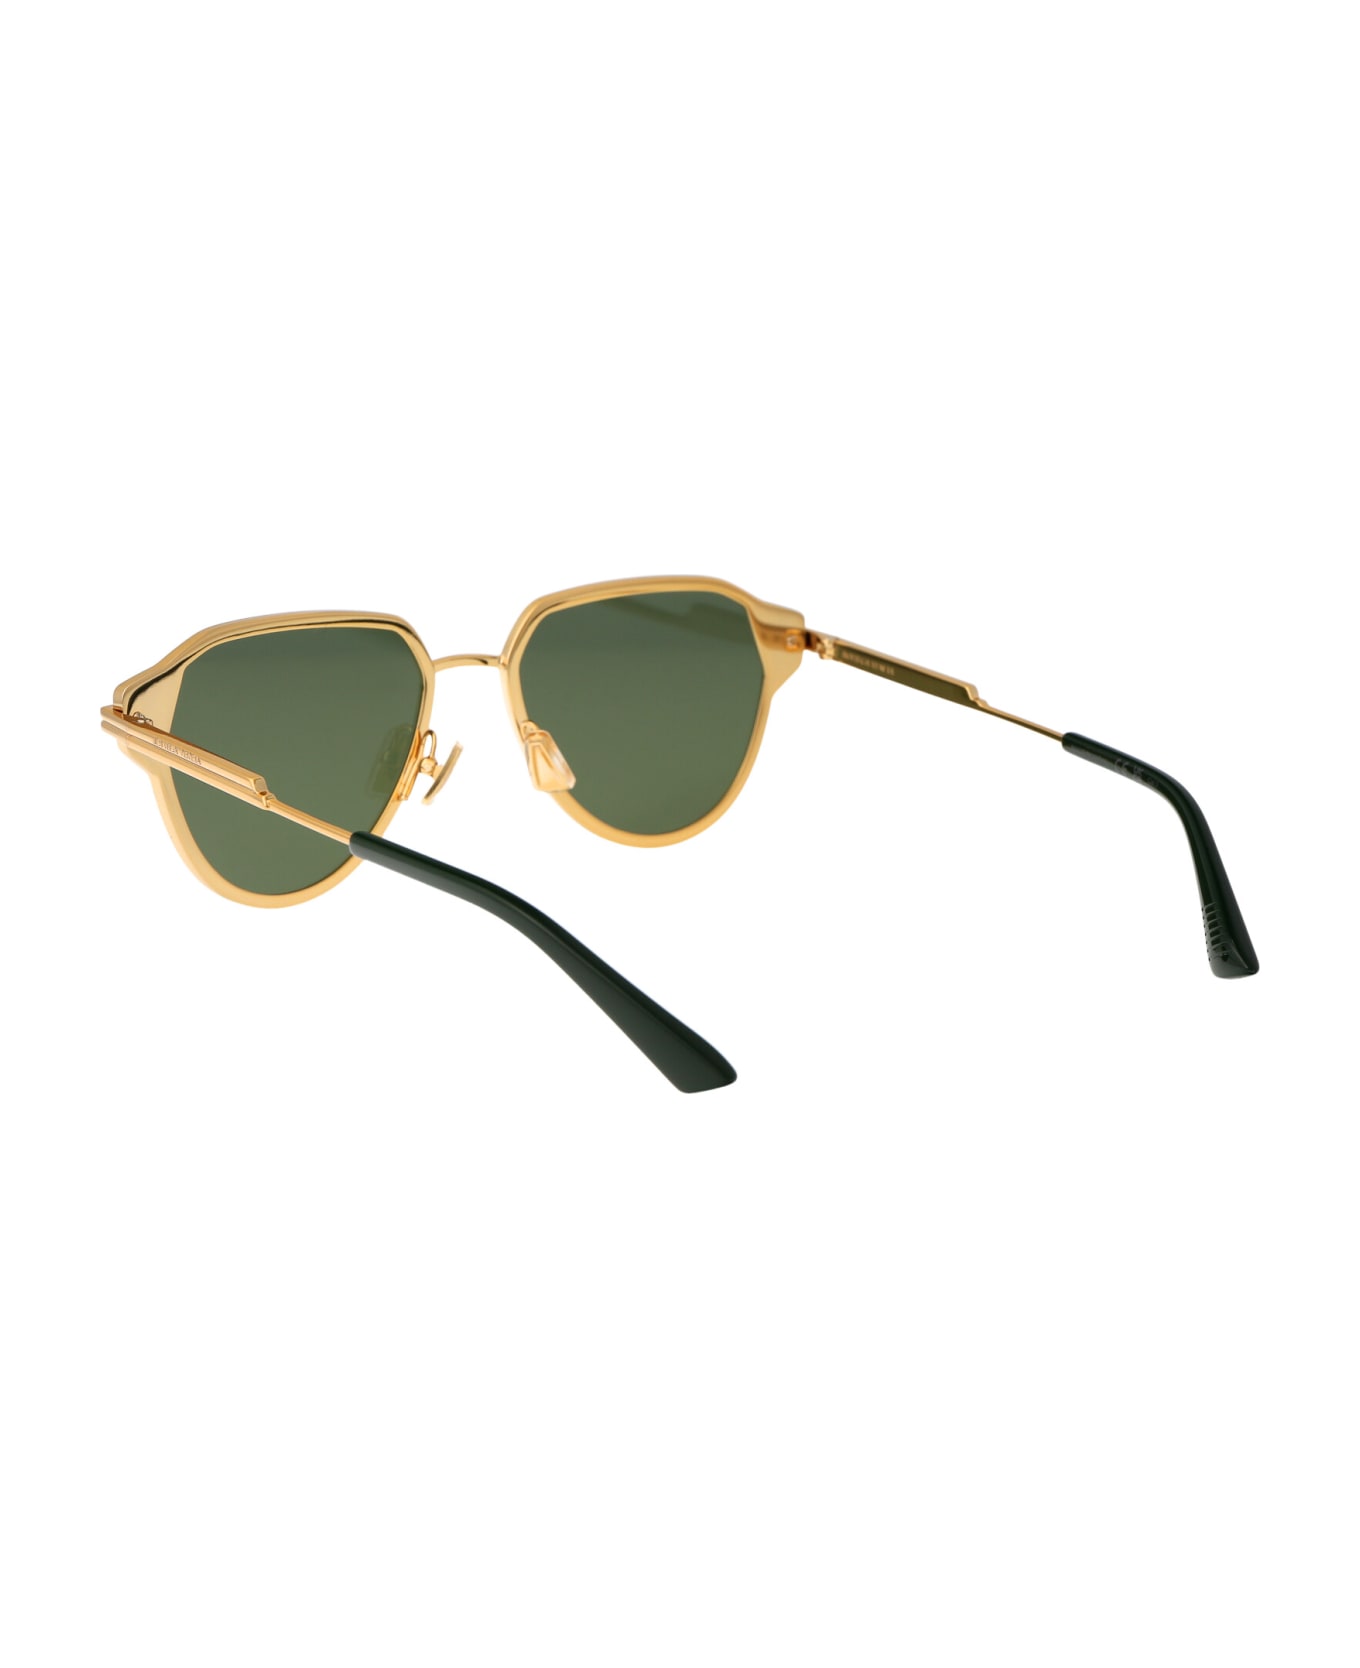 Bottega Veneta Eyewear Bv1271s Sunglasses - 003 GOLD GOLD GREEN